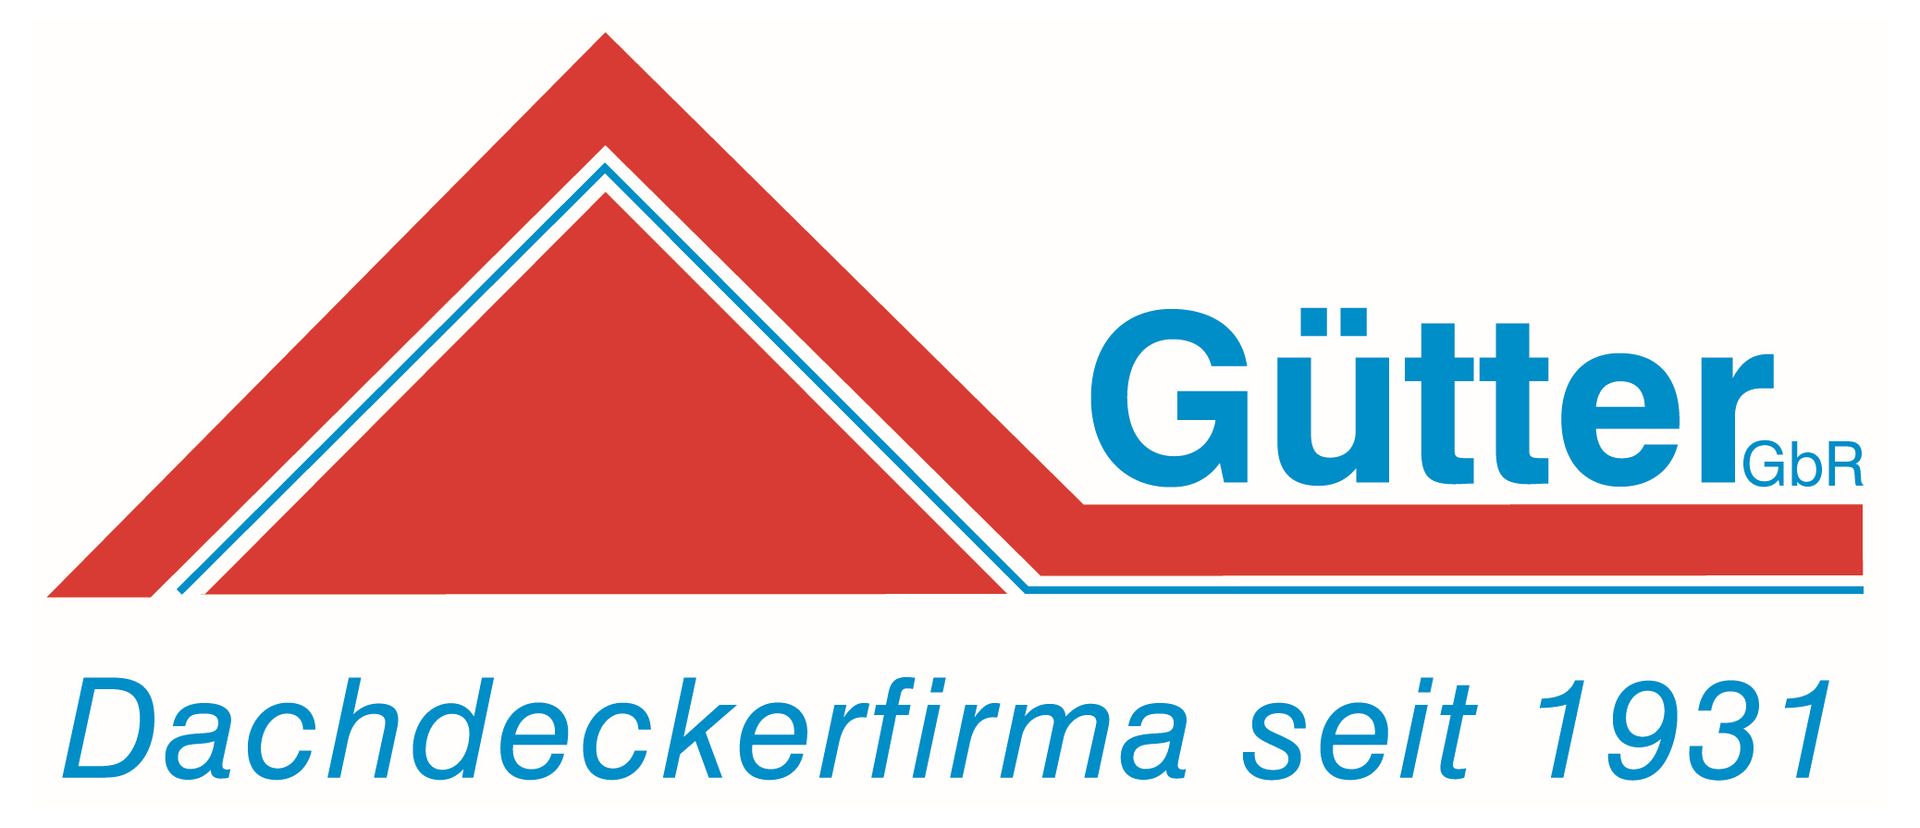 Dachdeckerfirma Gütter GbR-logo